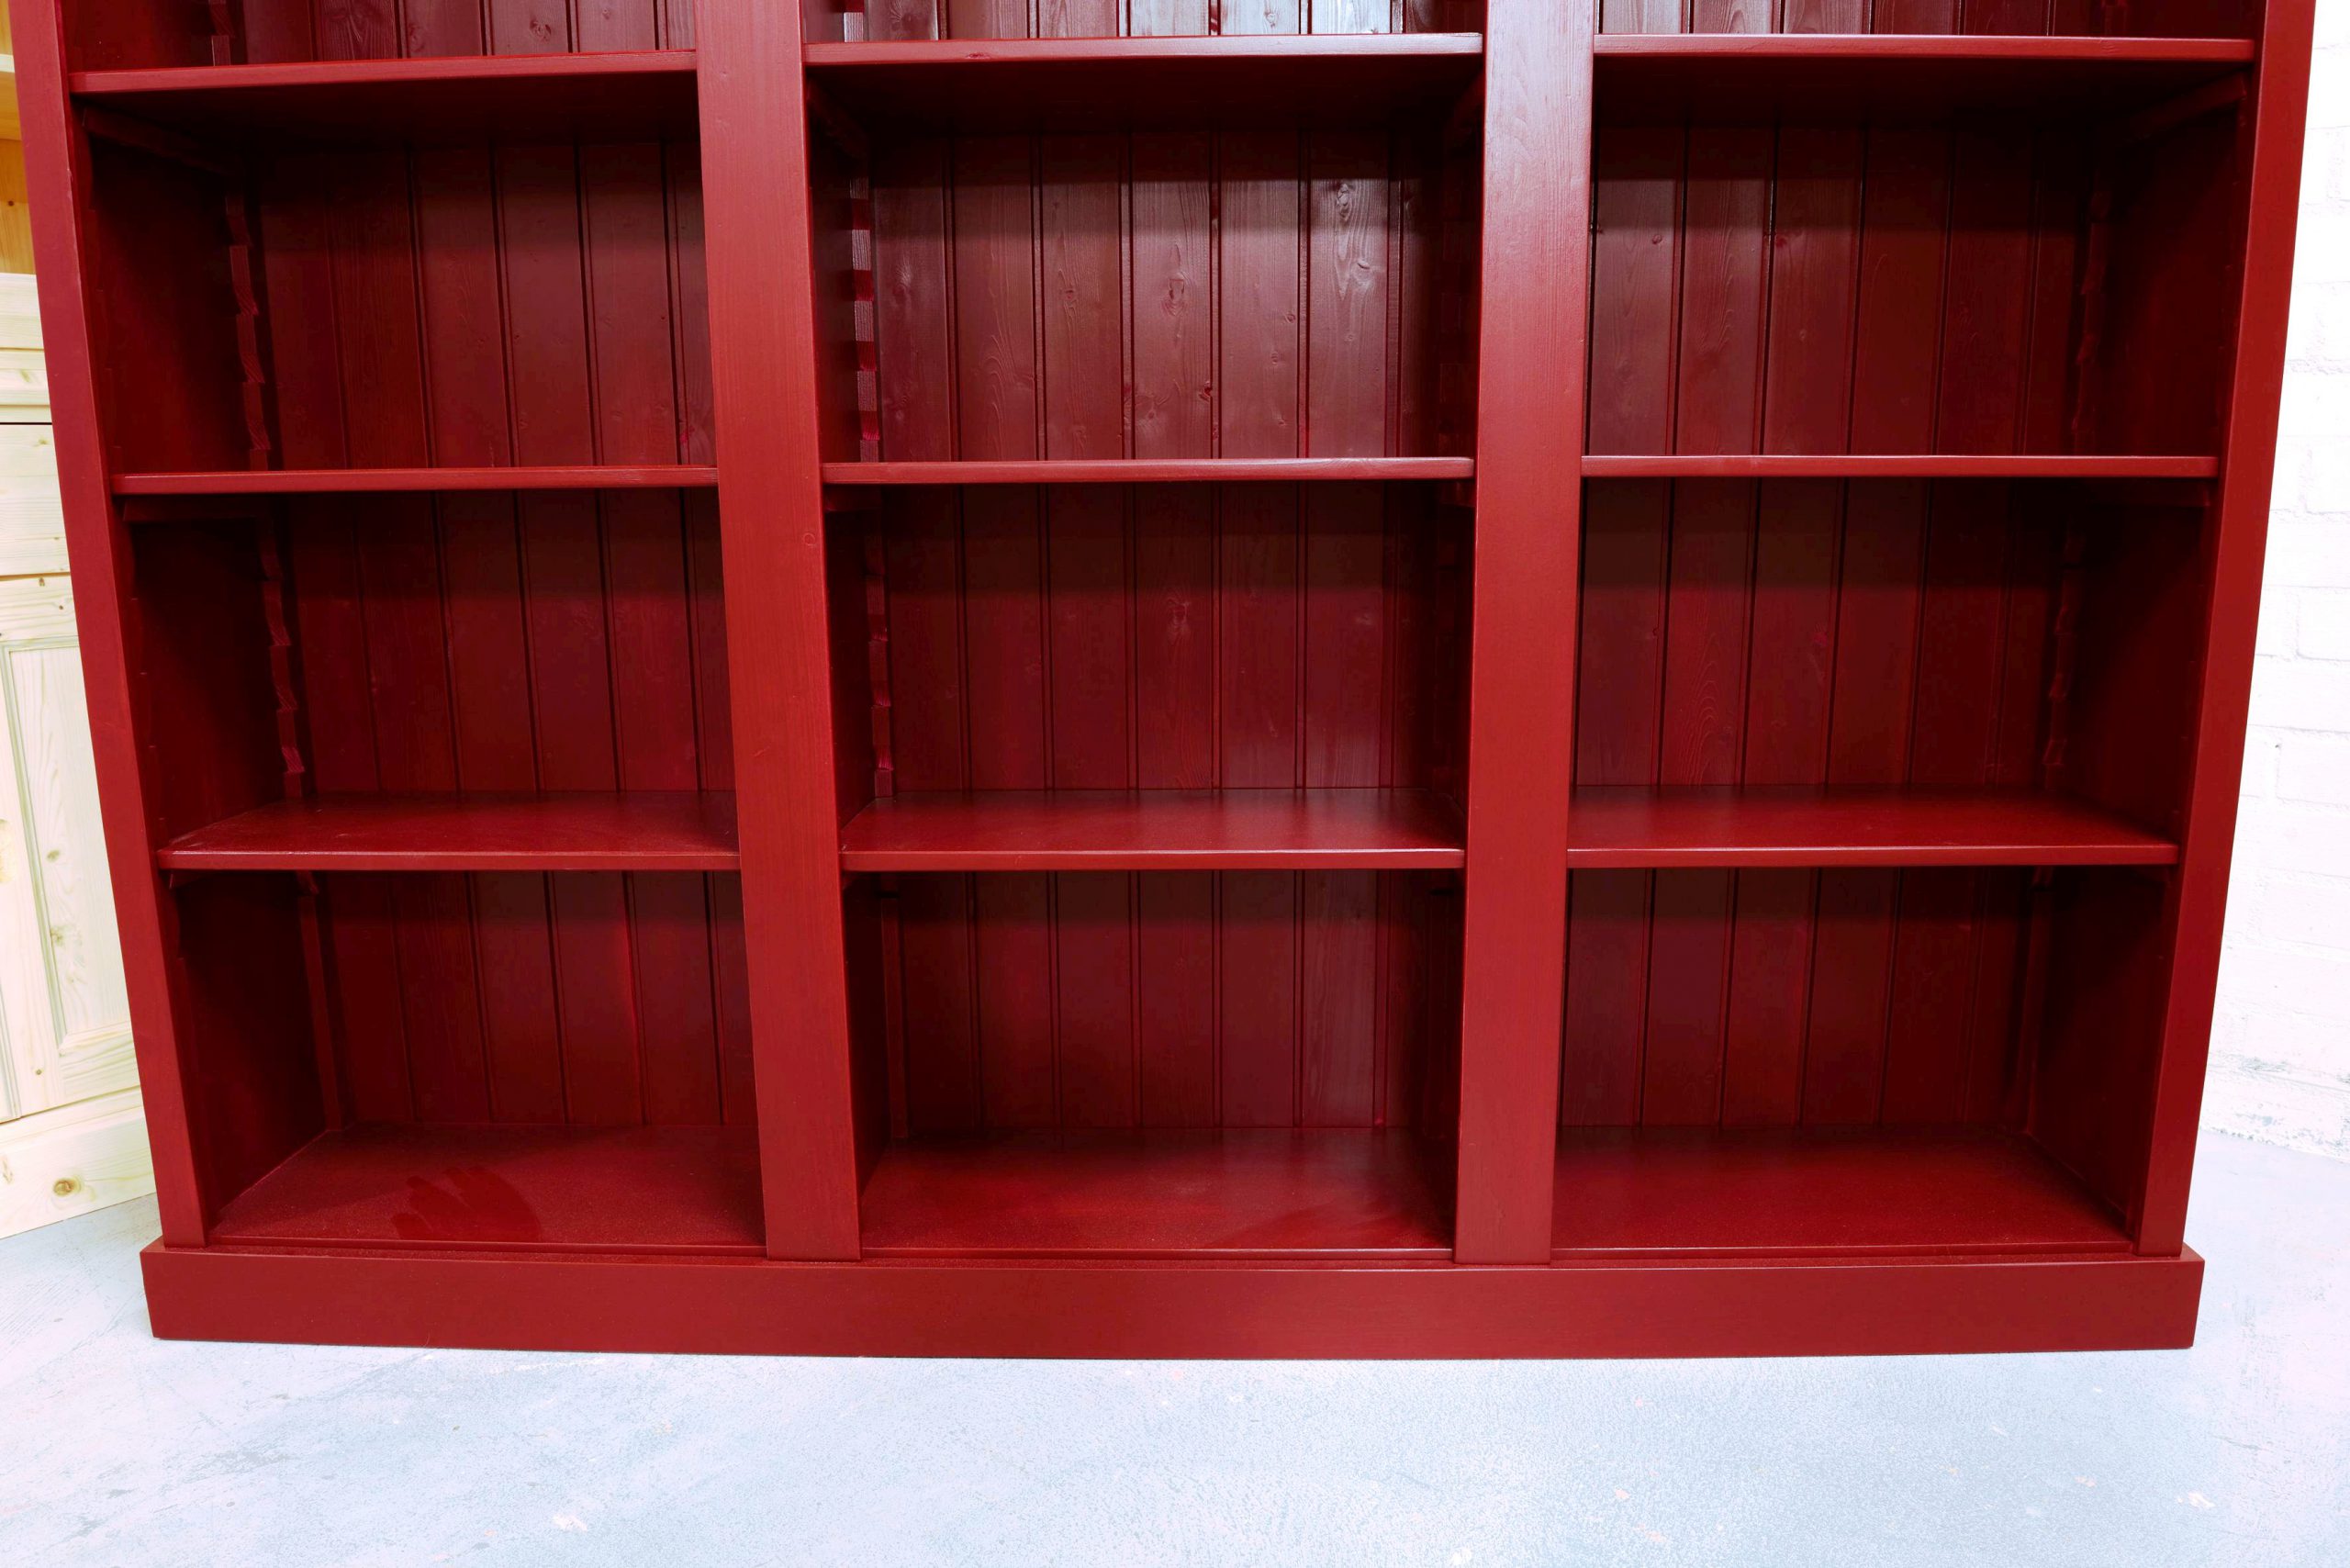 zuur Auto Ashley Furman Boekenkast rood - Maatwerk in boekenkasten - de Grenenhoeve